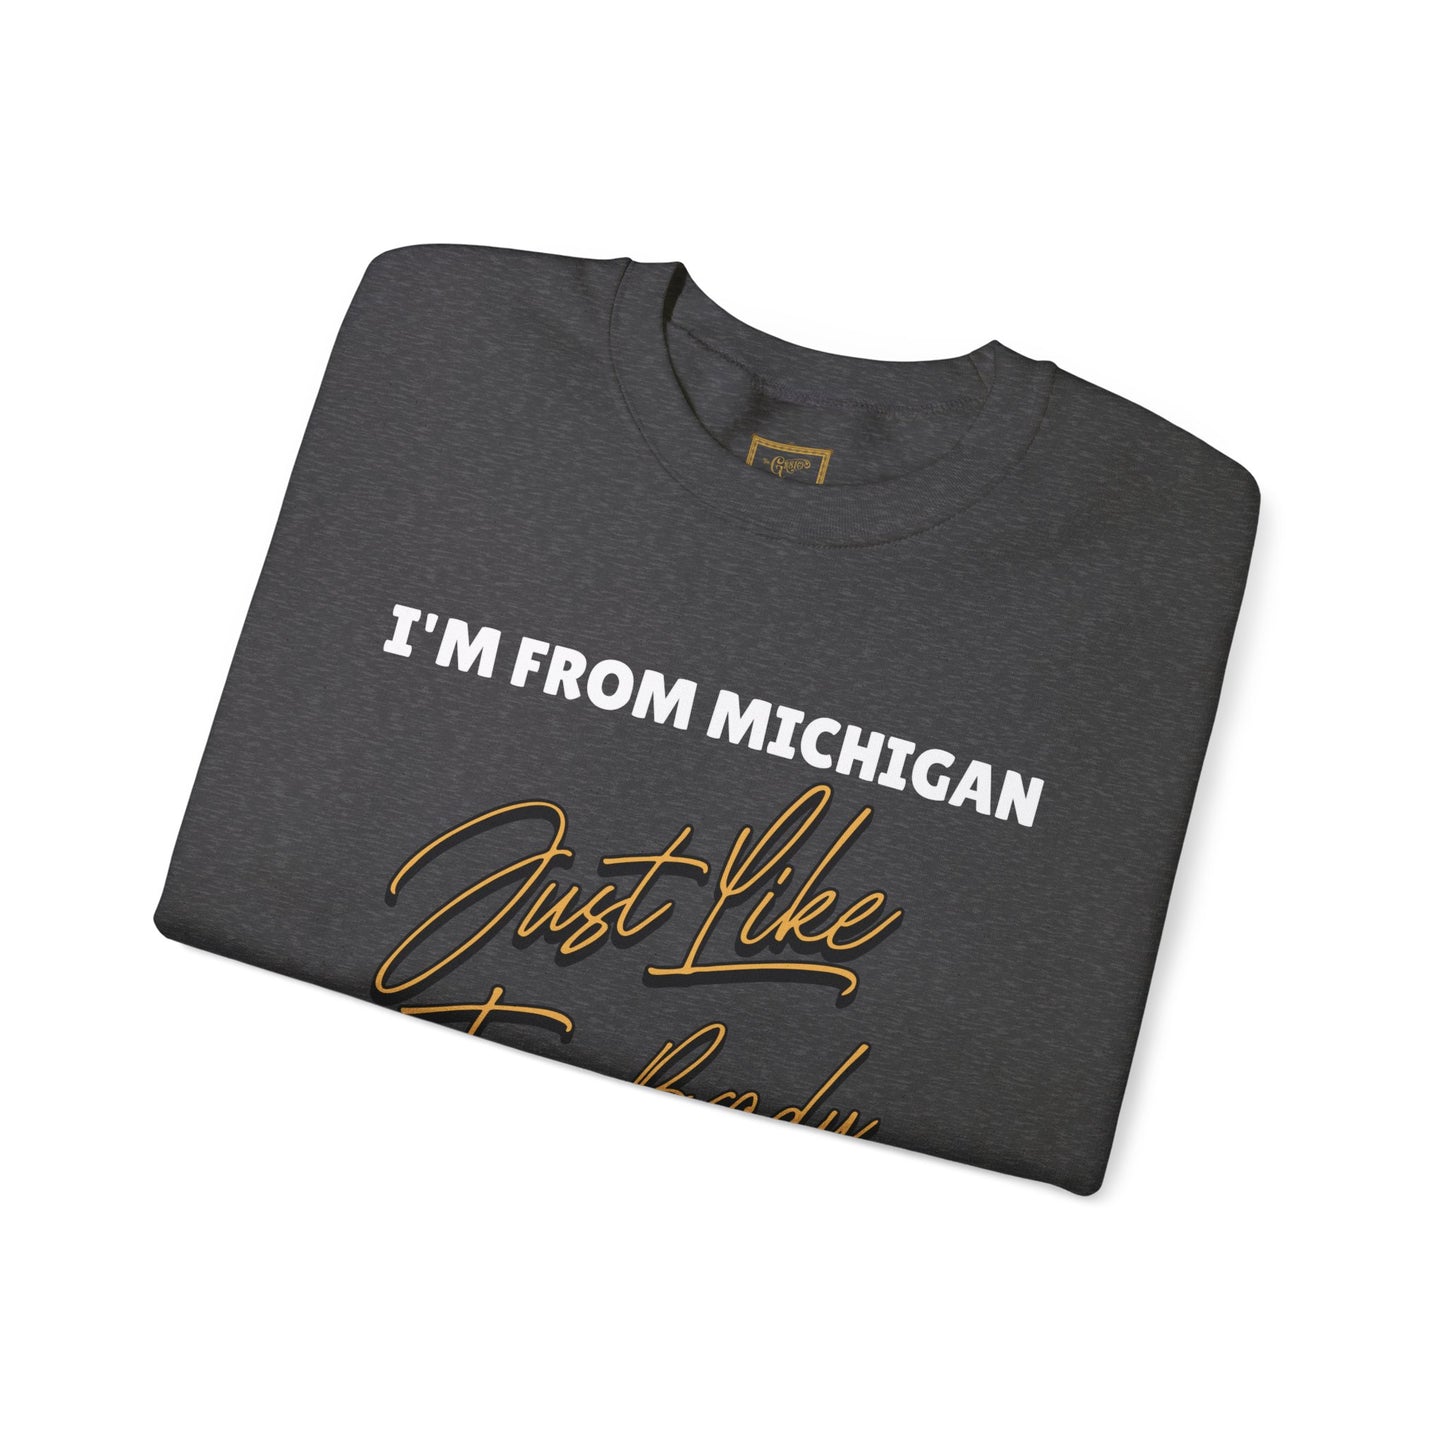 Steamroll - Michigan Tom Brady Sweatshirt